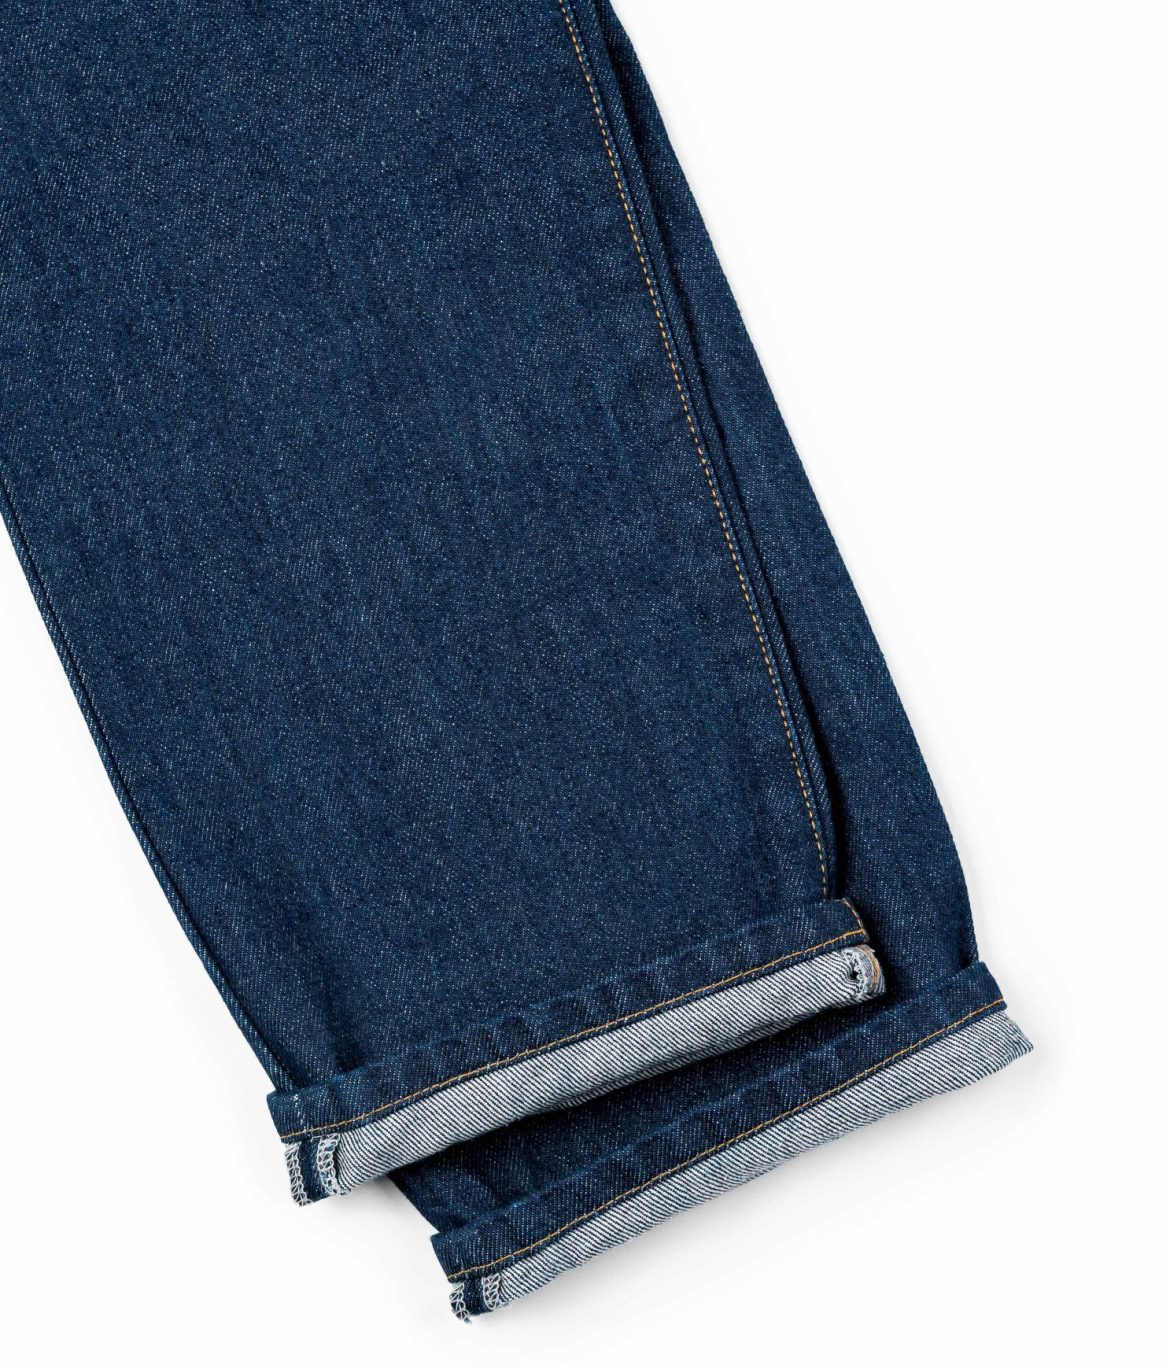 CHAD PROM Jeans New Largo Dark Blue - The Refinement